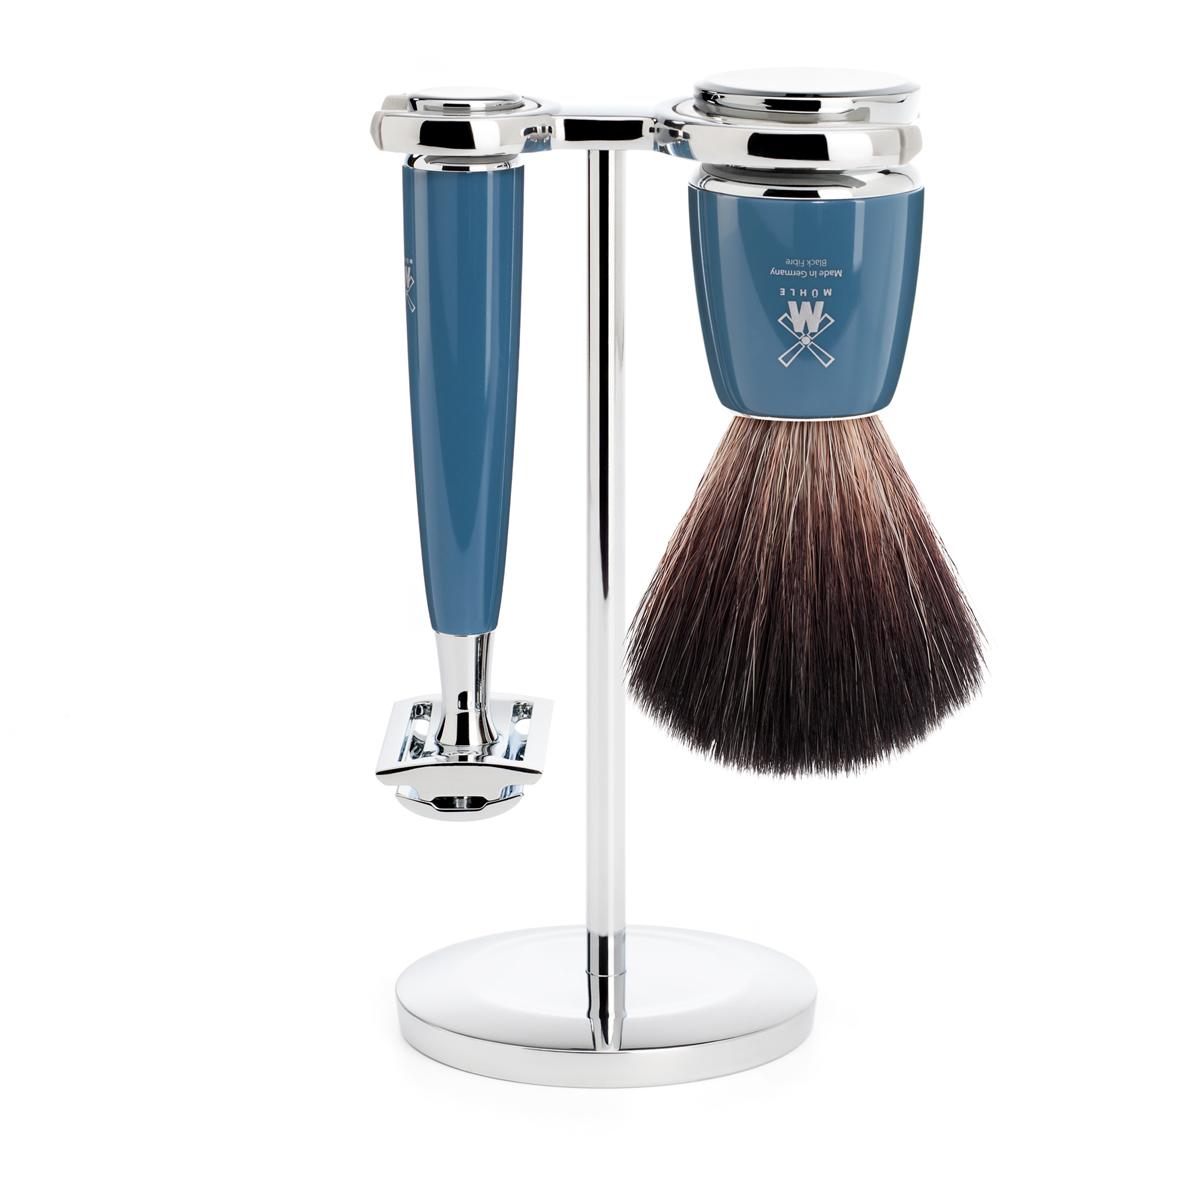 Mühle rytmo azul petróleo 3ud. set de afeitado de fibra negra / maquinilla de afeitar de seguridad